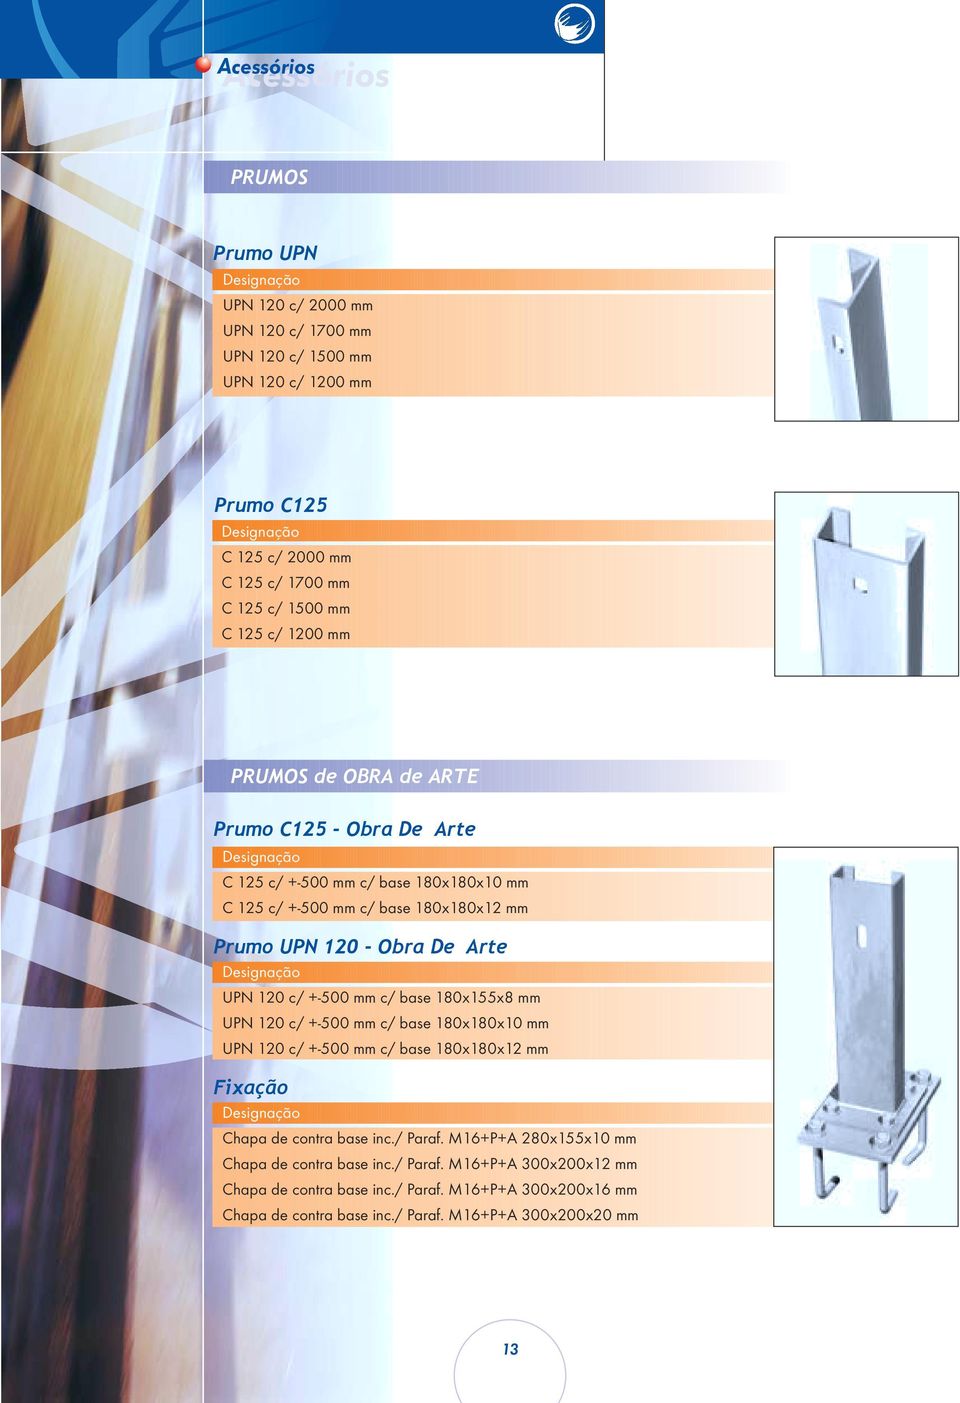 Designação UPN 120 c/ +-500 mm c/ base 180x155x8 mm UPN 120 c/ +-500 mm c/ base 180x180x10 mm UPN 120 c/ +-500 mm c/ base 180x180x12 mm Fixação Designação Chapa de contra base inc./ Paraf.